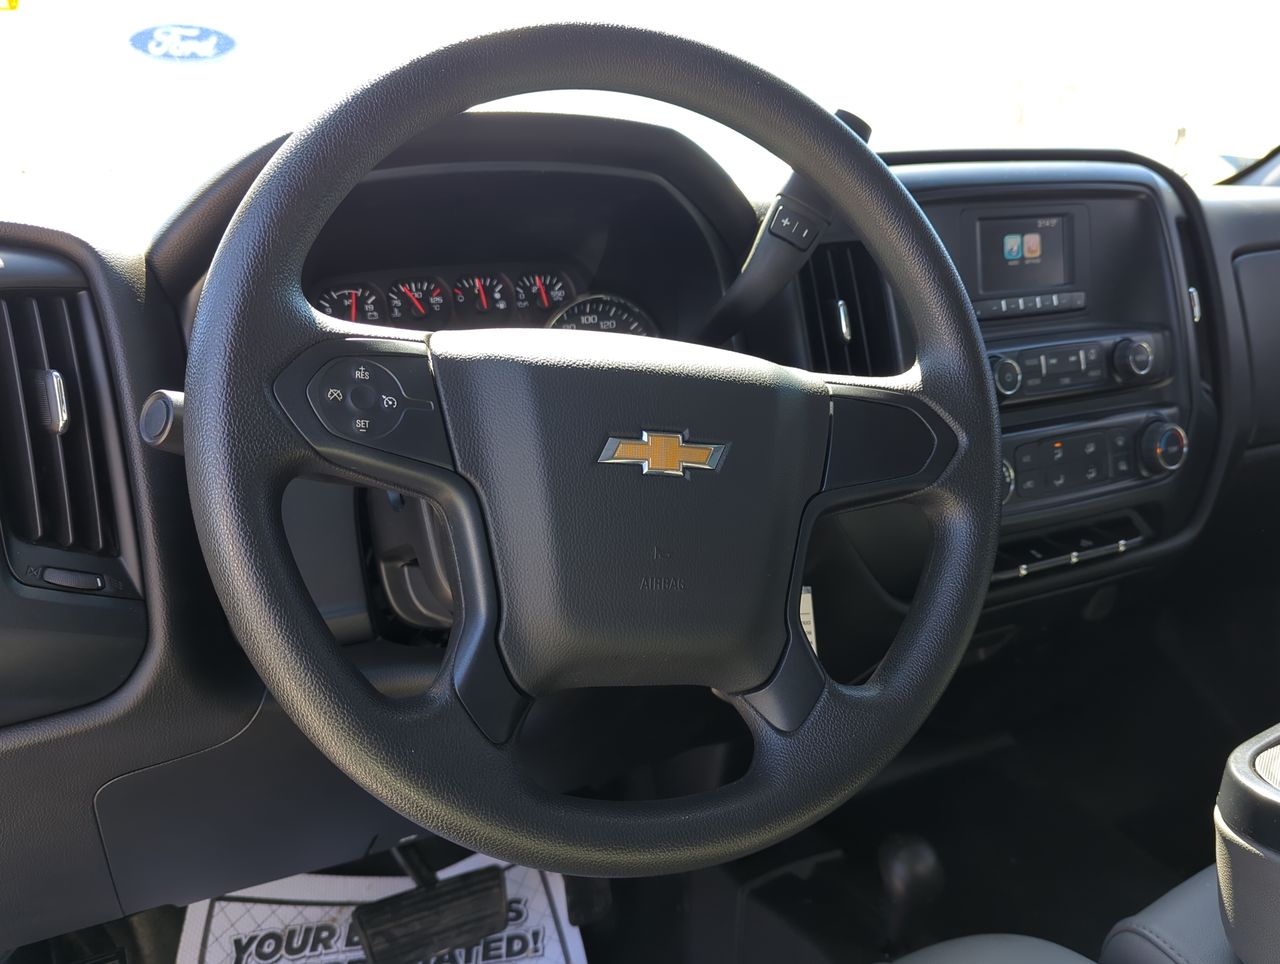 2017 Chevrolet Silverado 1500 - 21592B Full Image 14